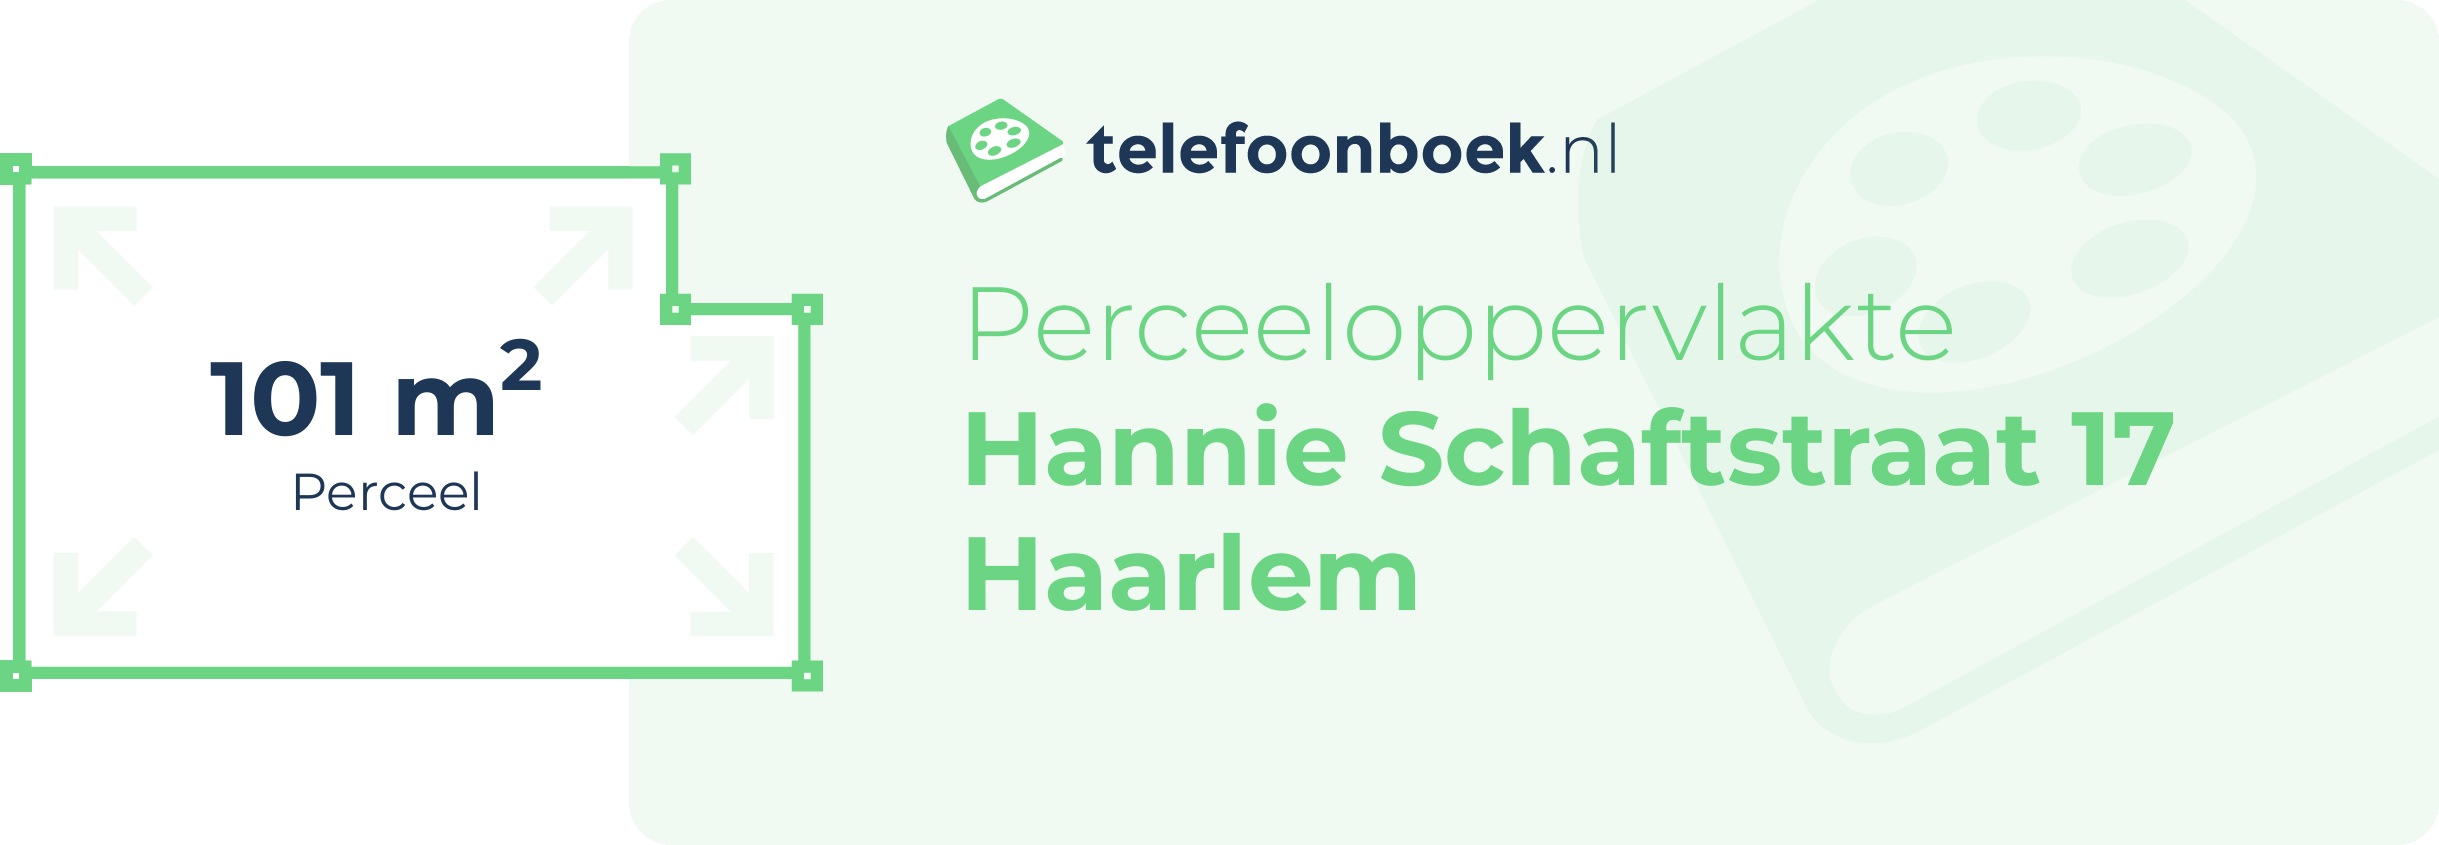 Perceeloppervlakte Hannie Schaftstraat 17 Haarlem